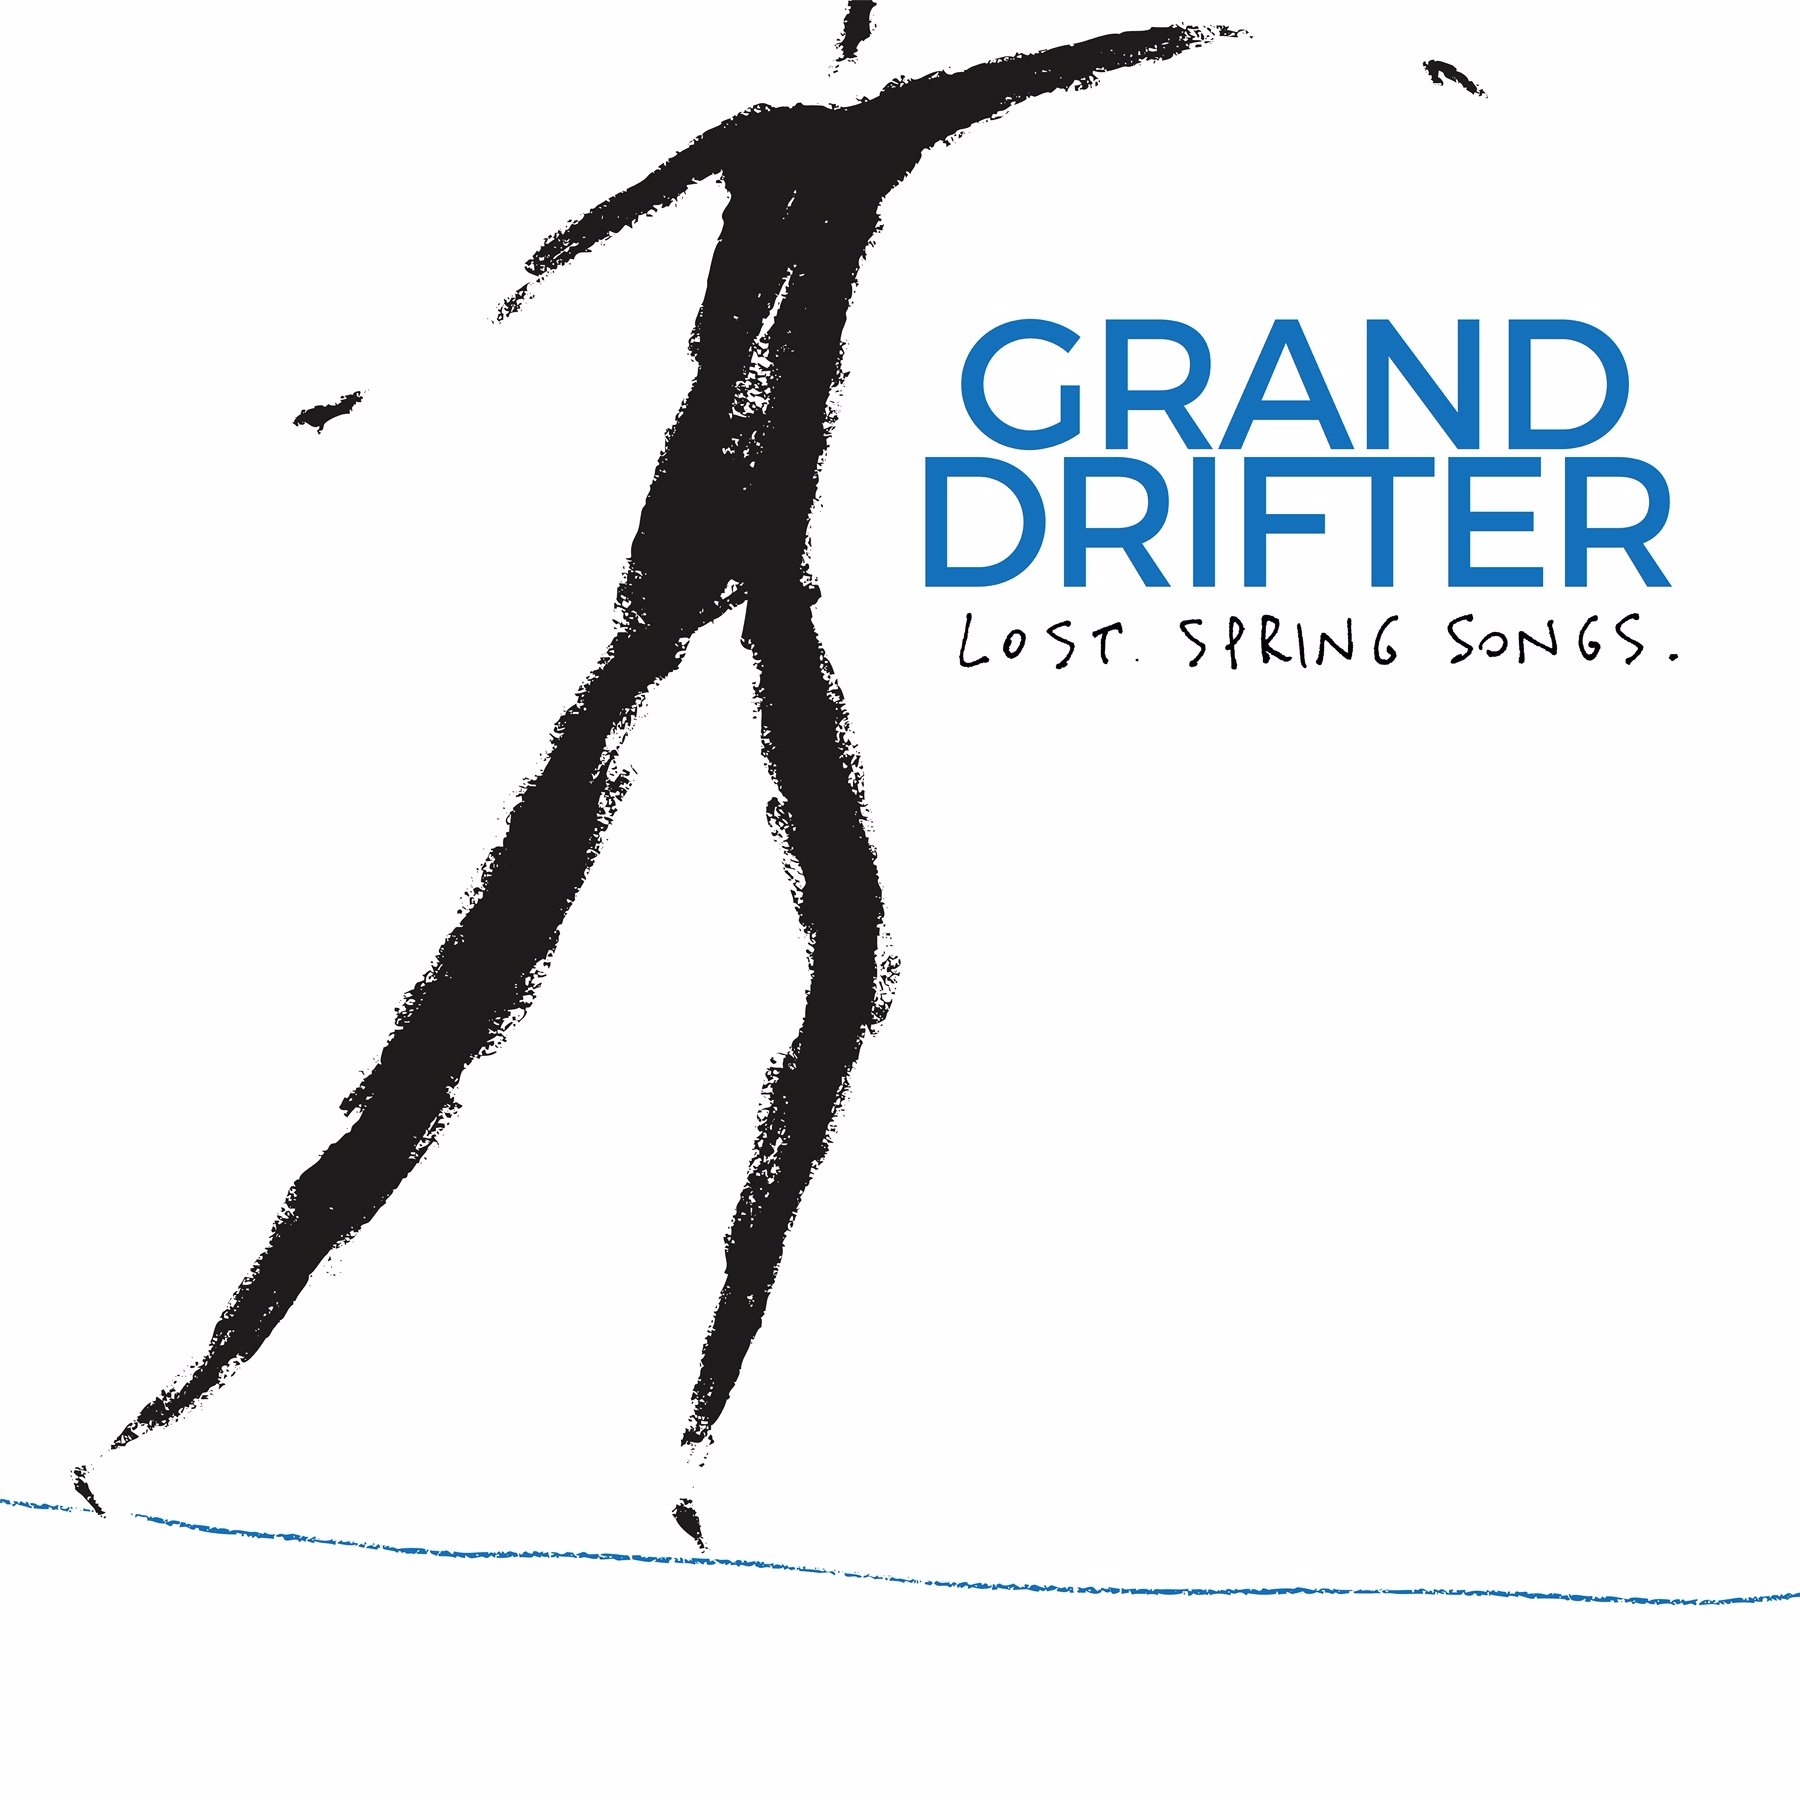 Disco d’esordio per l’acquese Grand Drifter